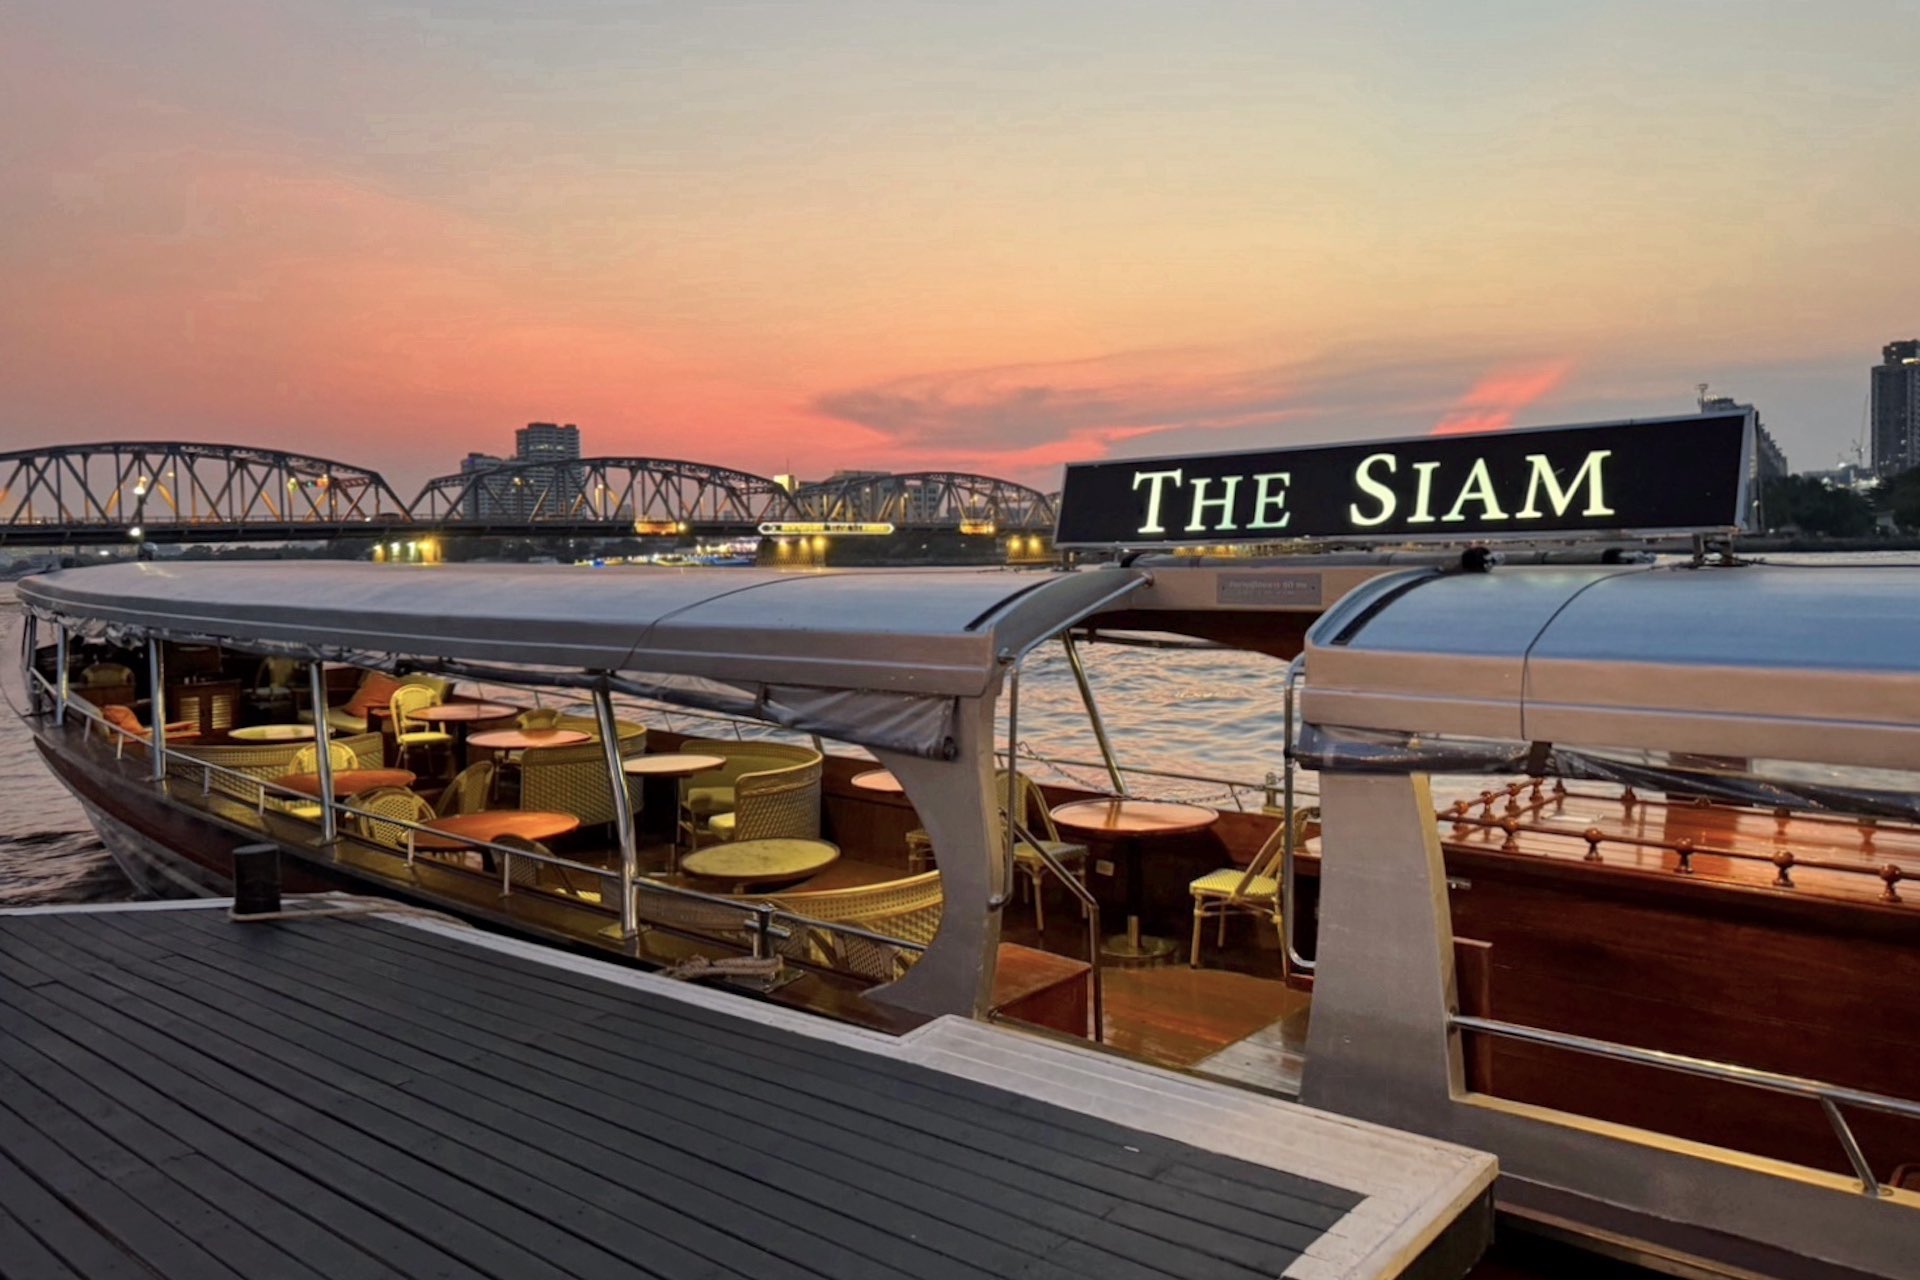 The Siam Cruise Boat